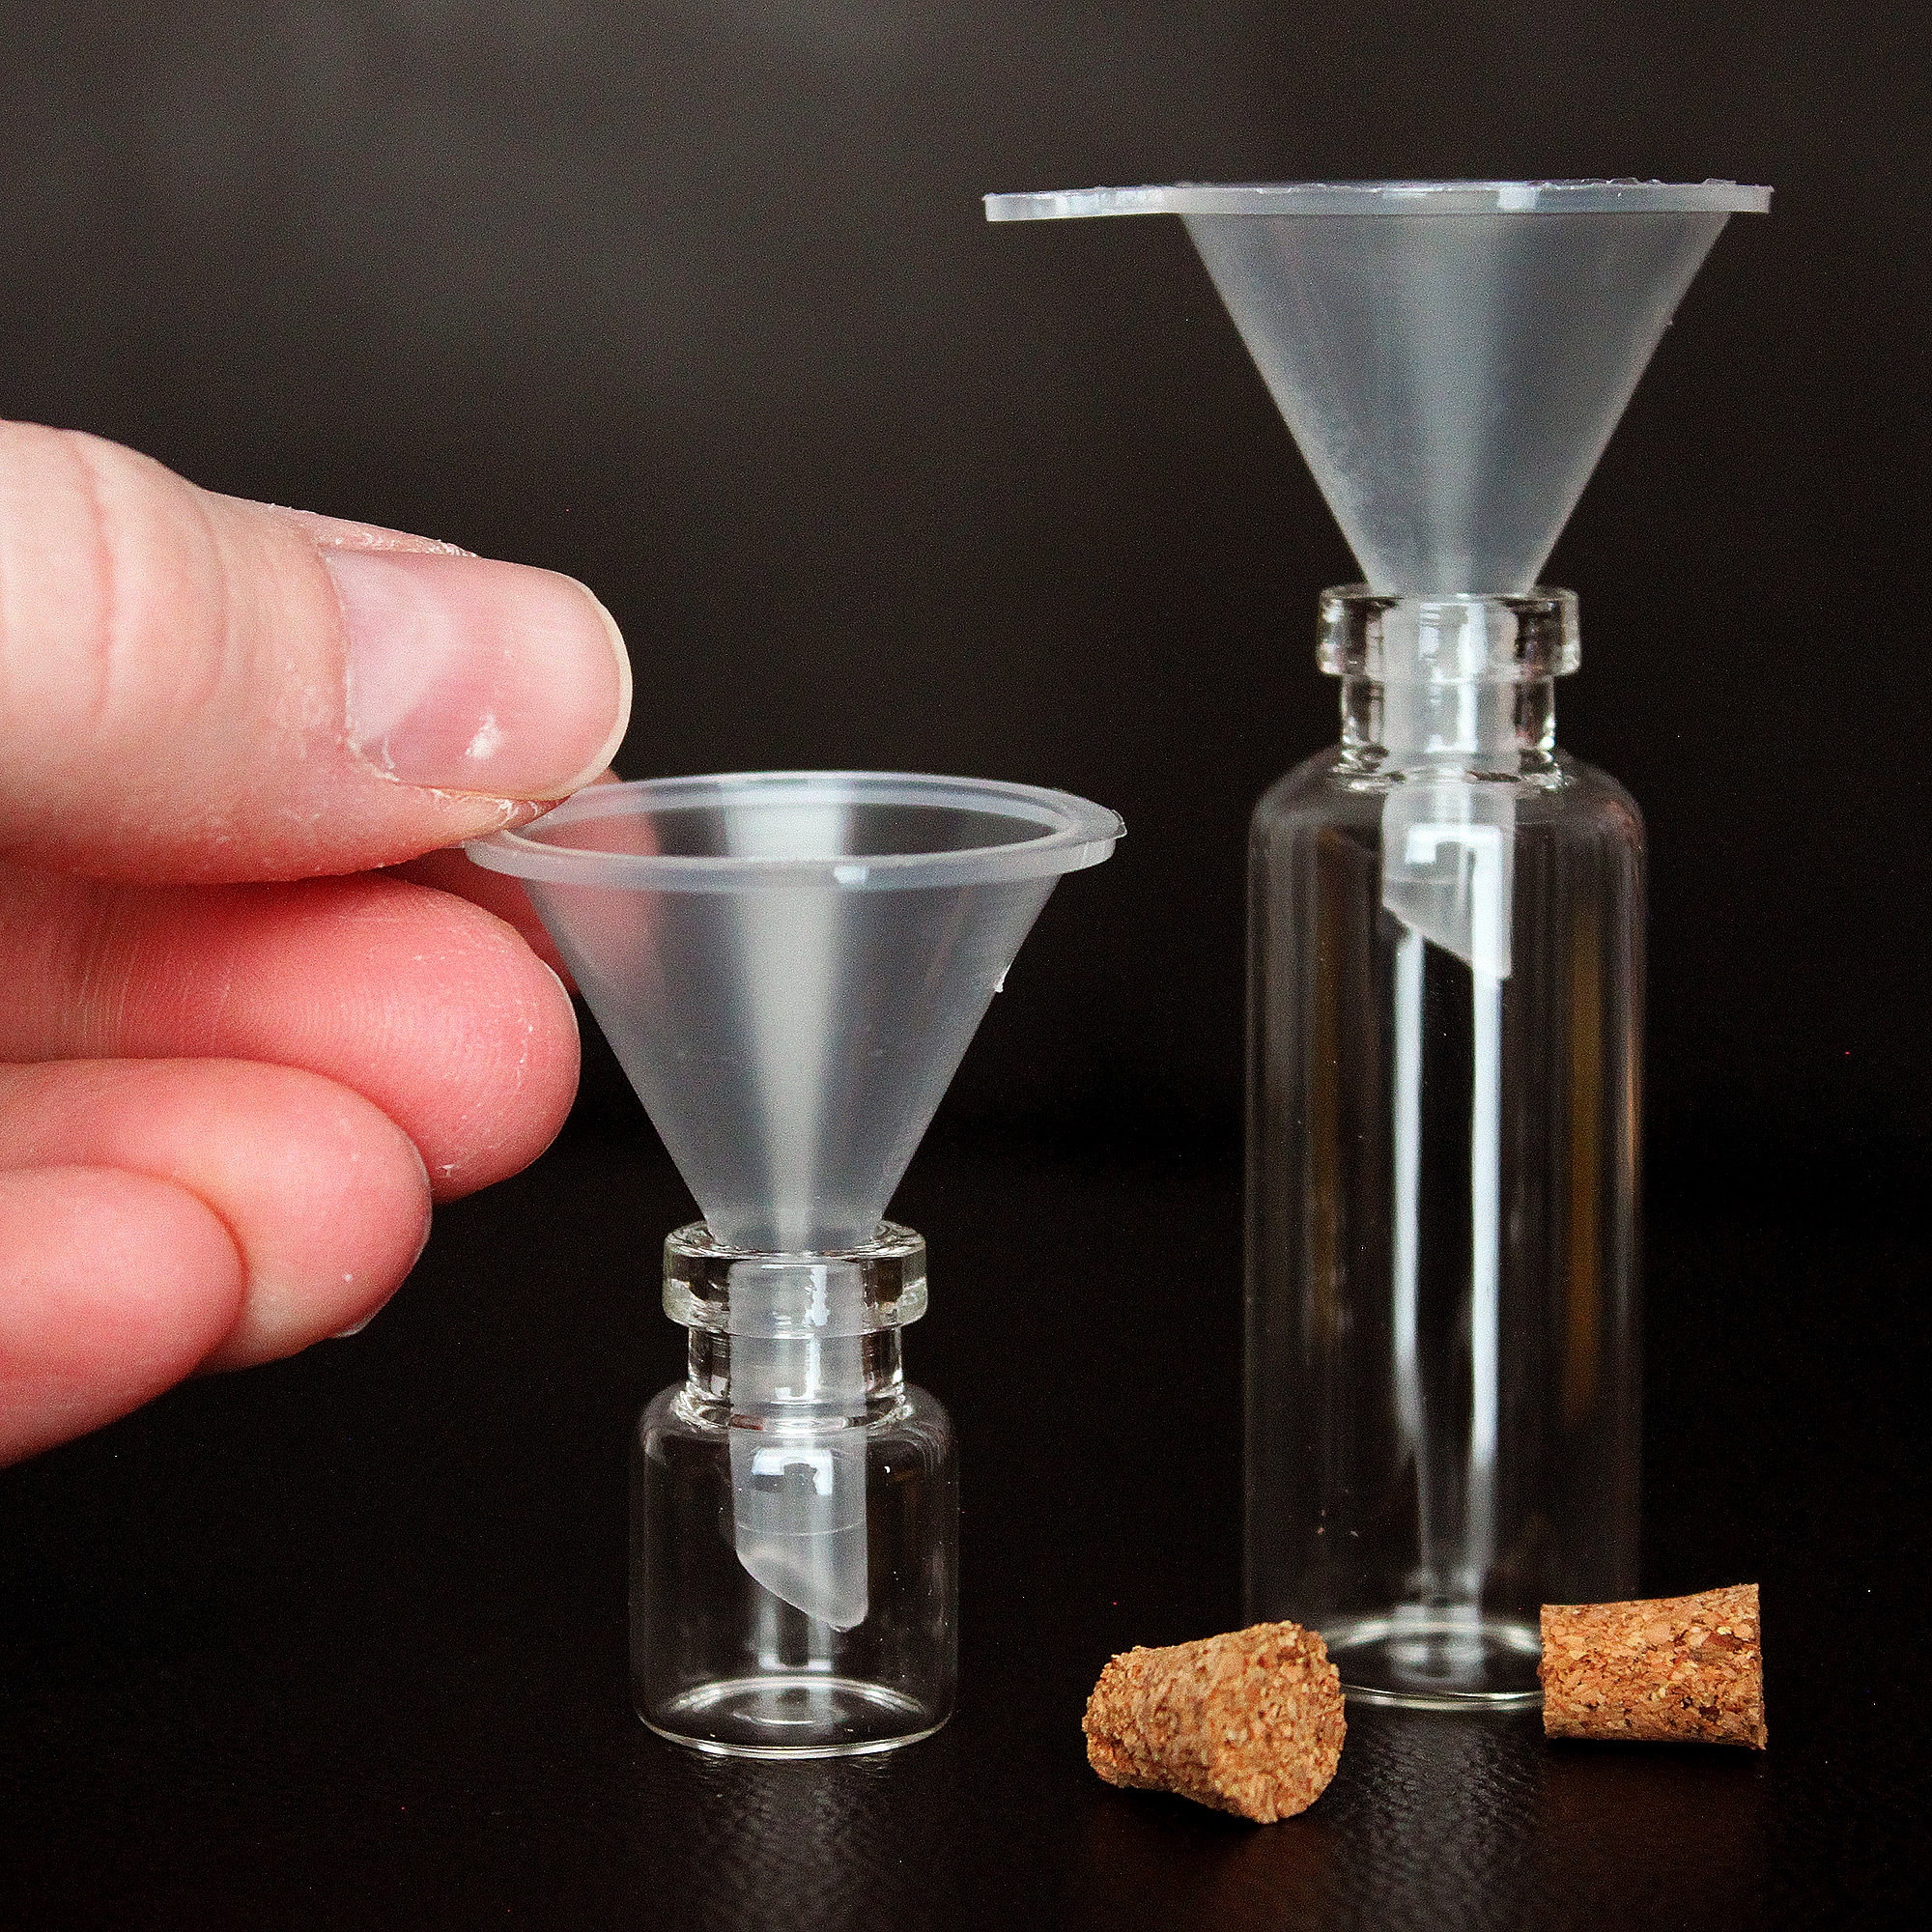 thinkstar Small Funnels For Filling Bottles Mini Polycrylic Plastic Funnel  Narrow Neck Funnel For Bottles,Sand